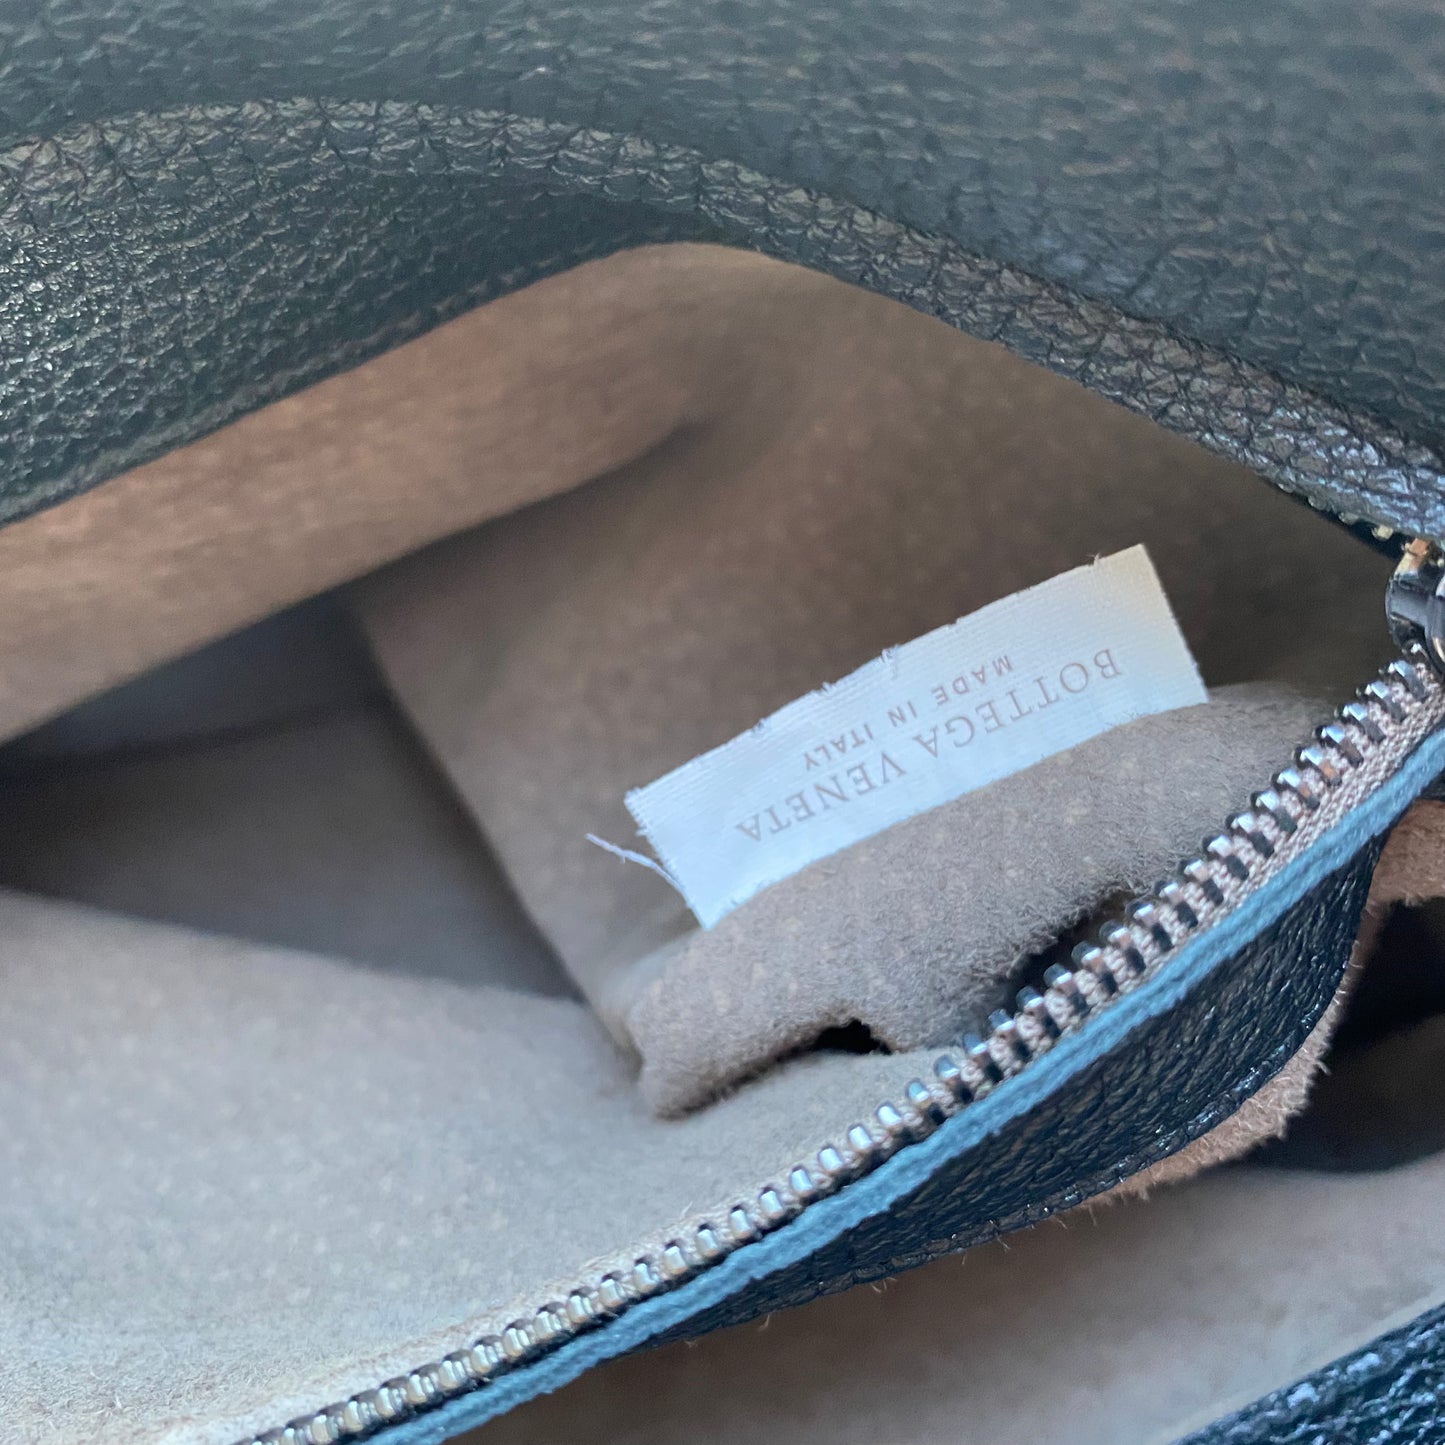 Bottega Veneta Roma Triple-Compartment Pebbled Leather Intrecciato Tote Bag